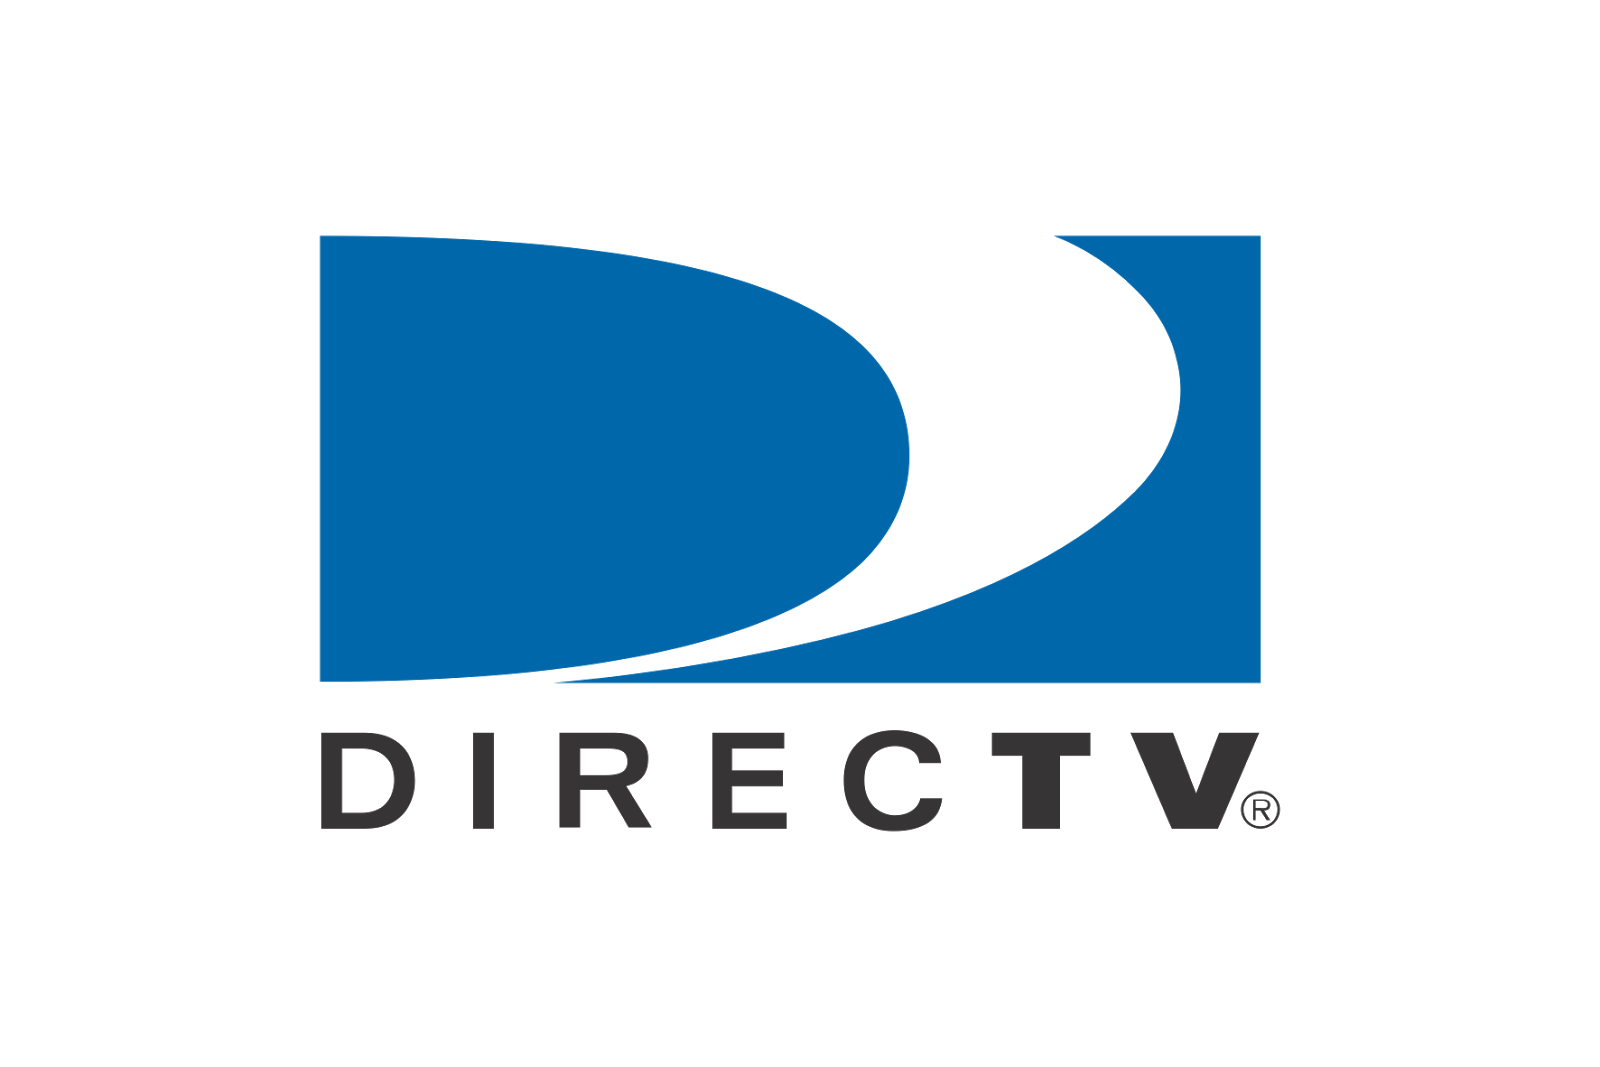 DirecTV Logo - Image - Logo DirecTV.png | Logopedia | FANDOM powered by Wikia